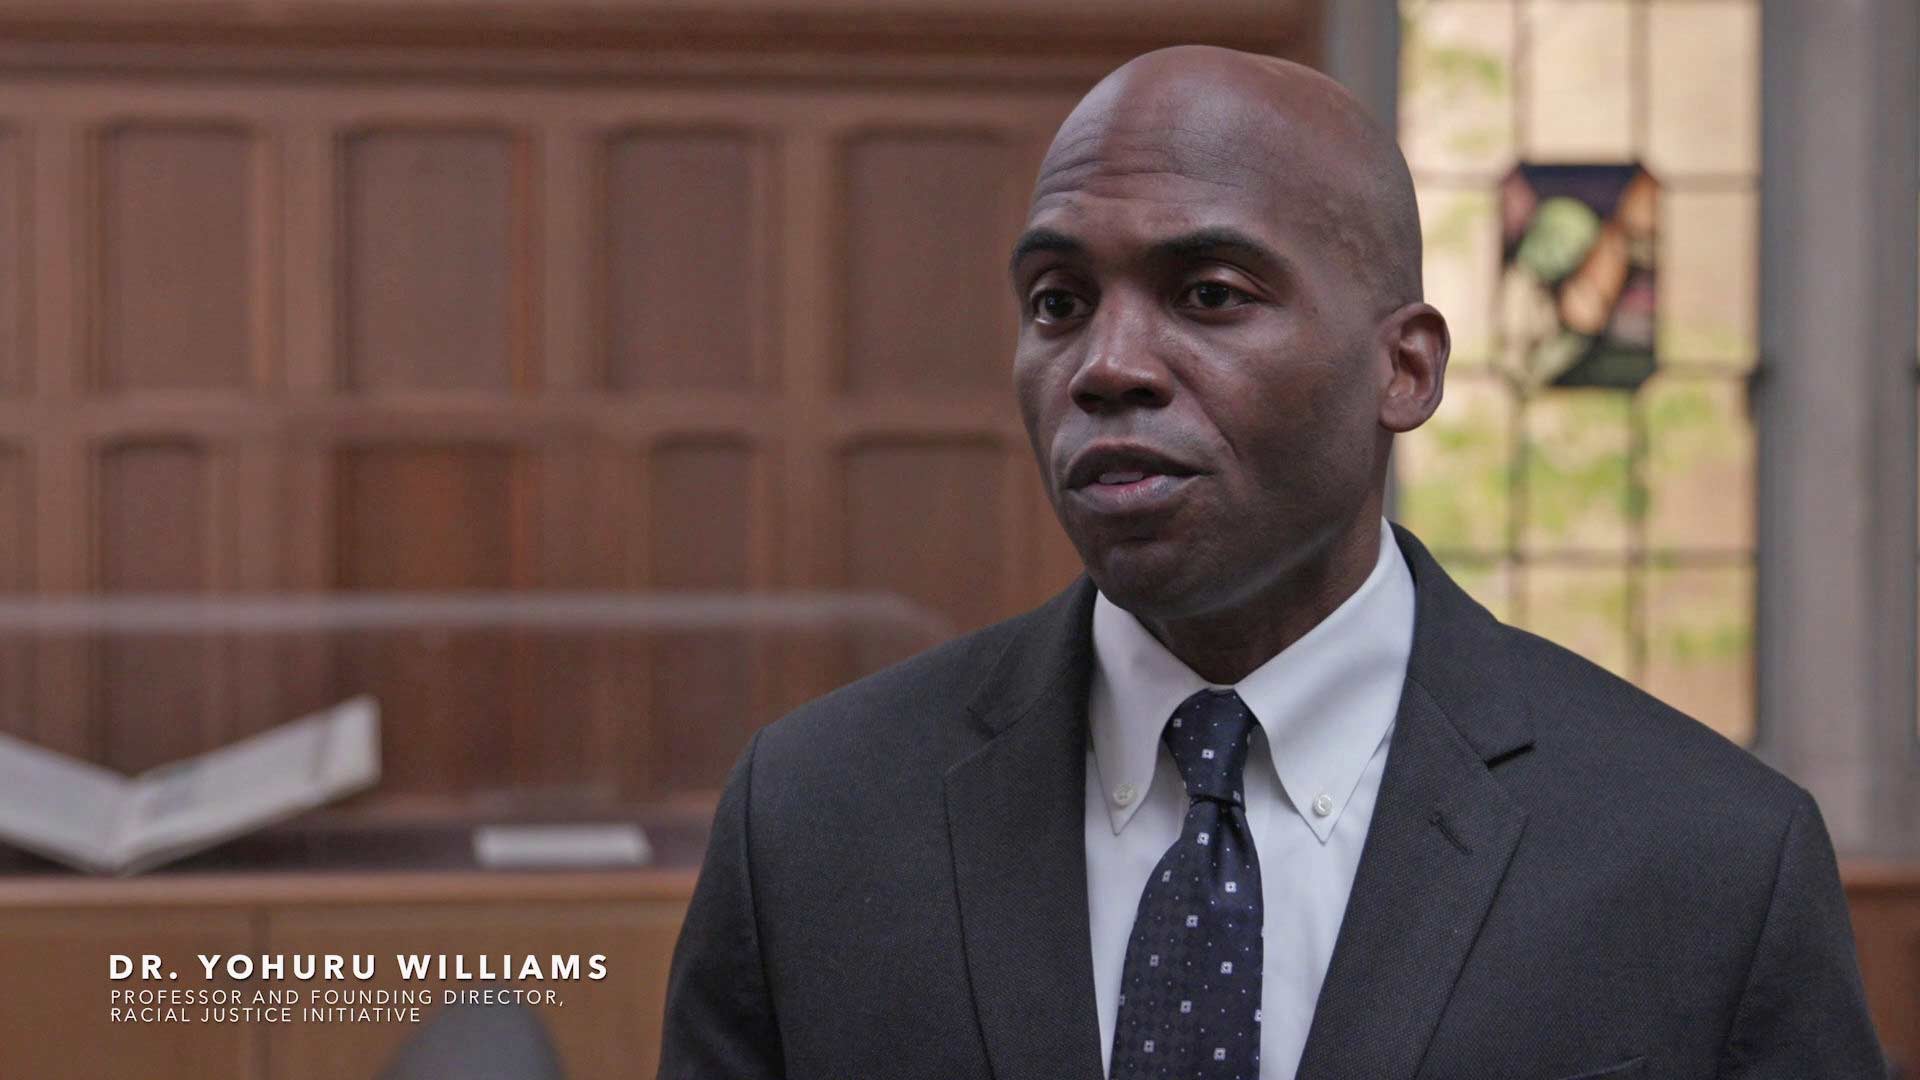 screenshot from the video showing yohuru williams speaking